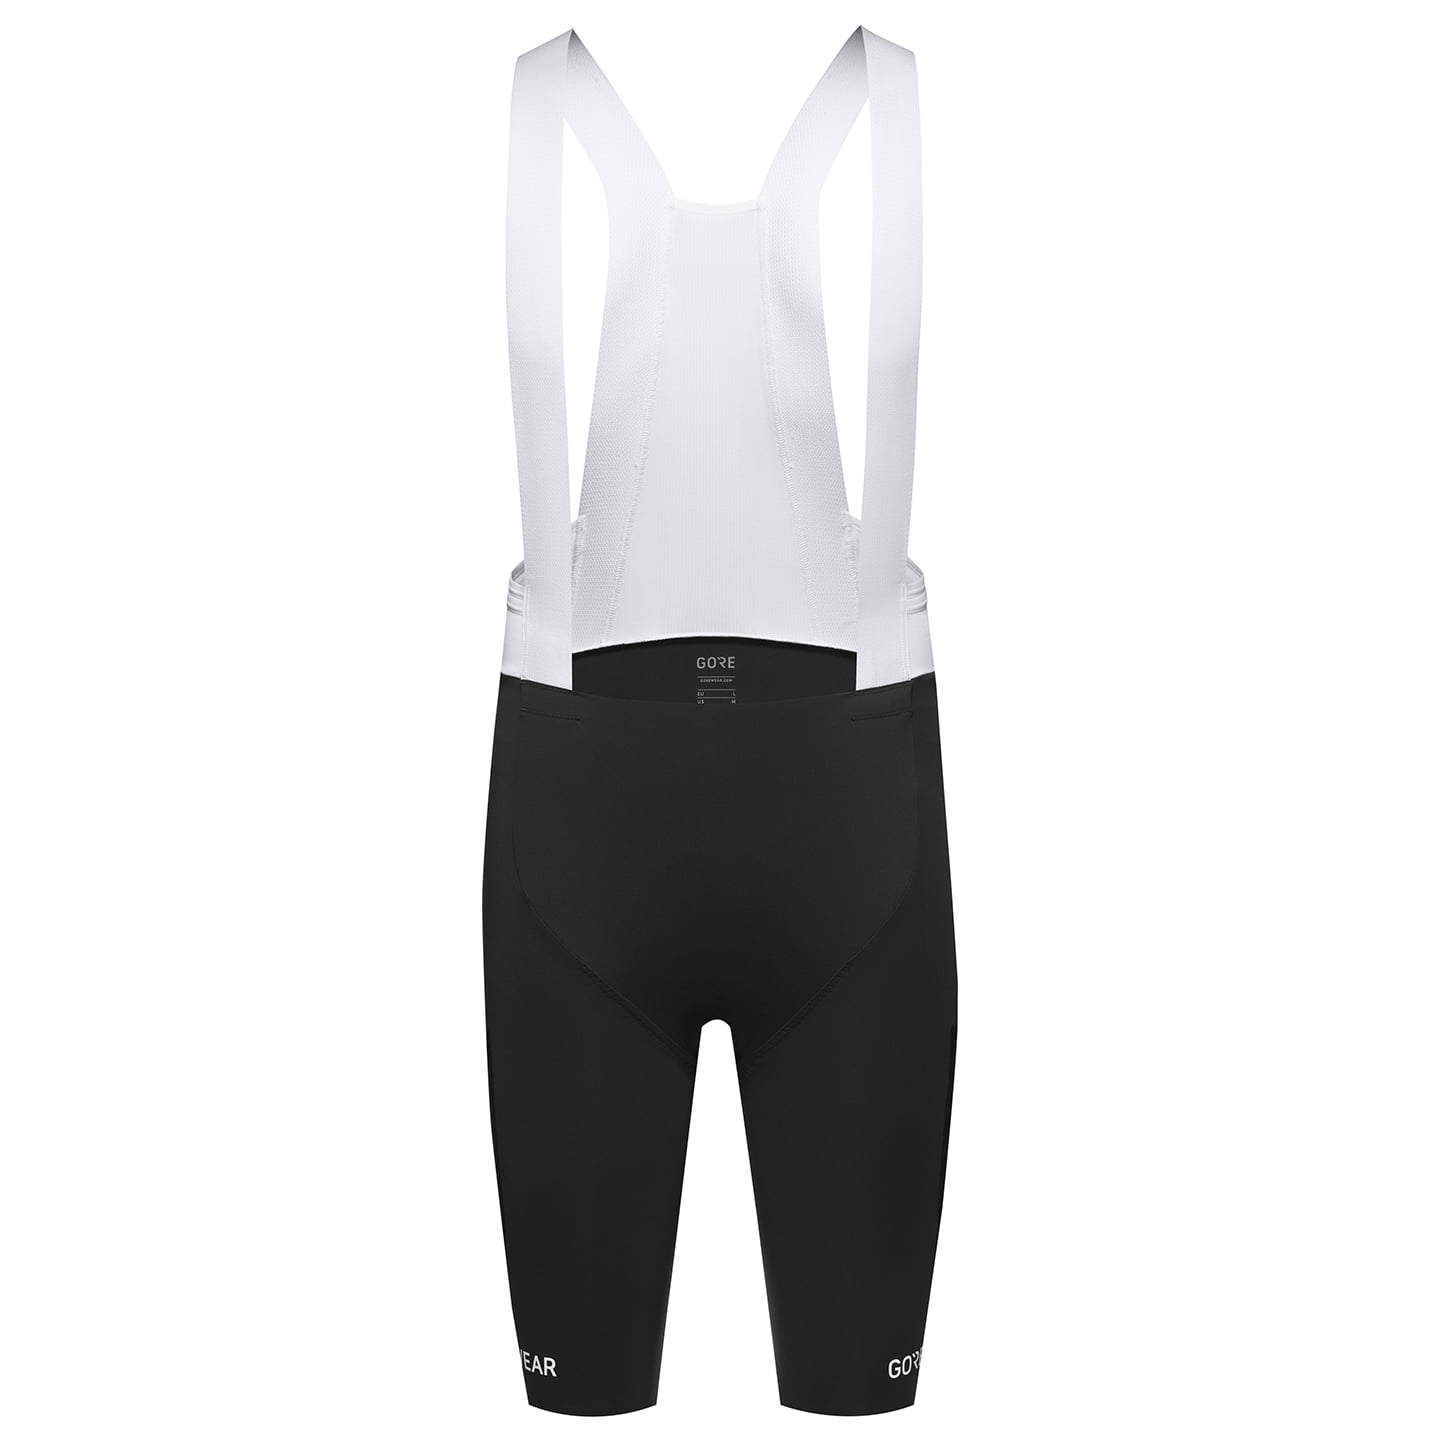 Spinshift Cargo Bib Shorts Bib Shorts, for men, size 2XL, Cycle shorts, Cycling clothing